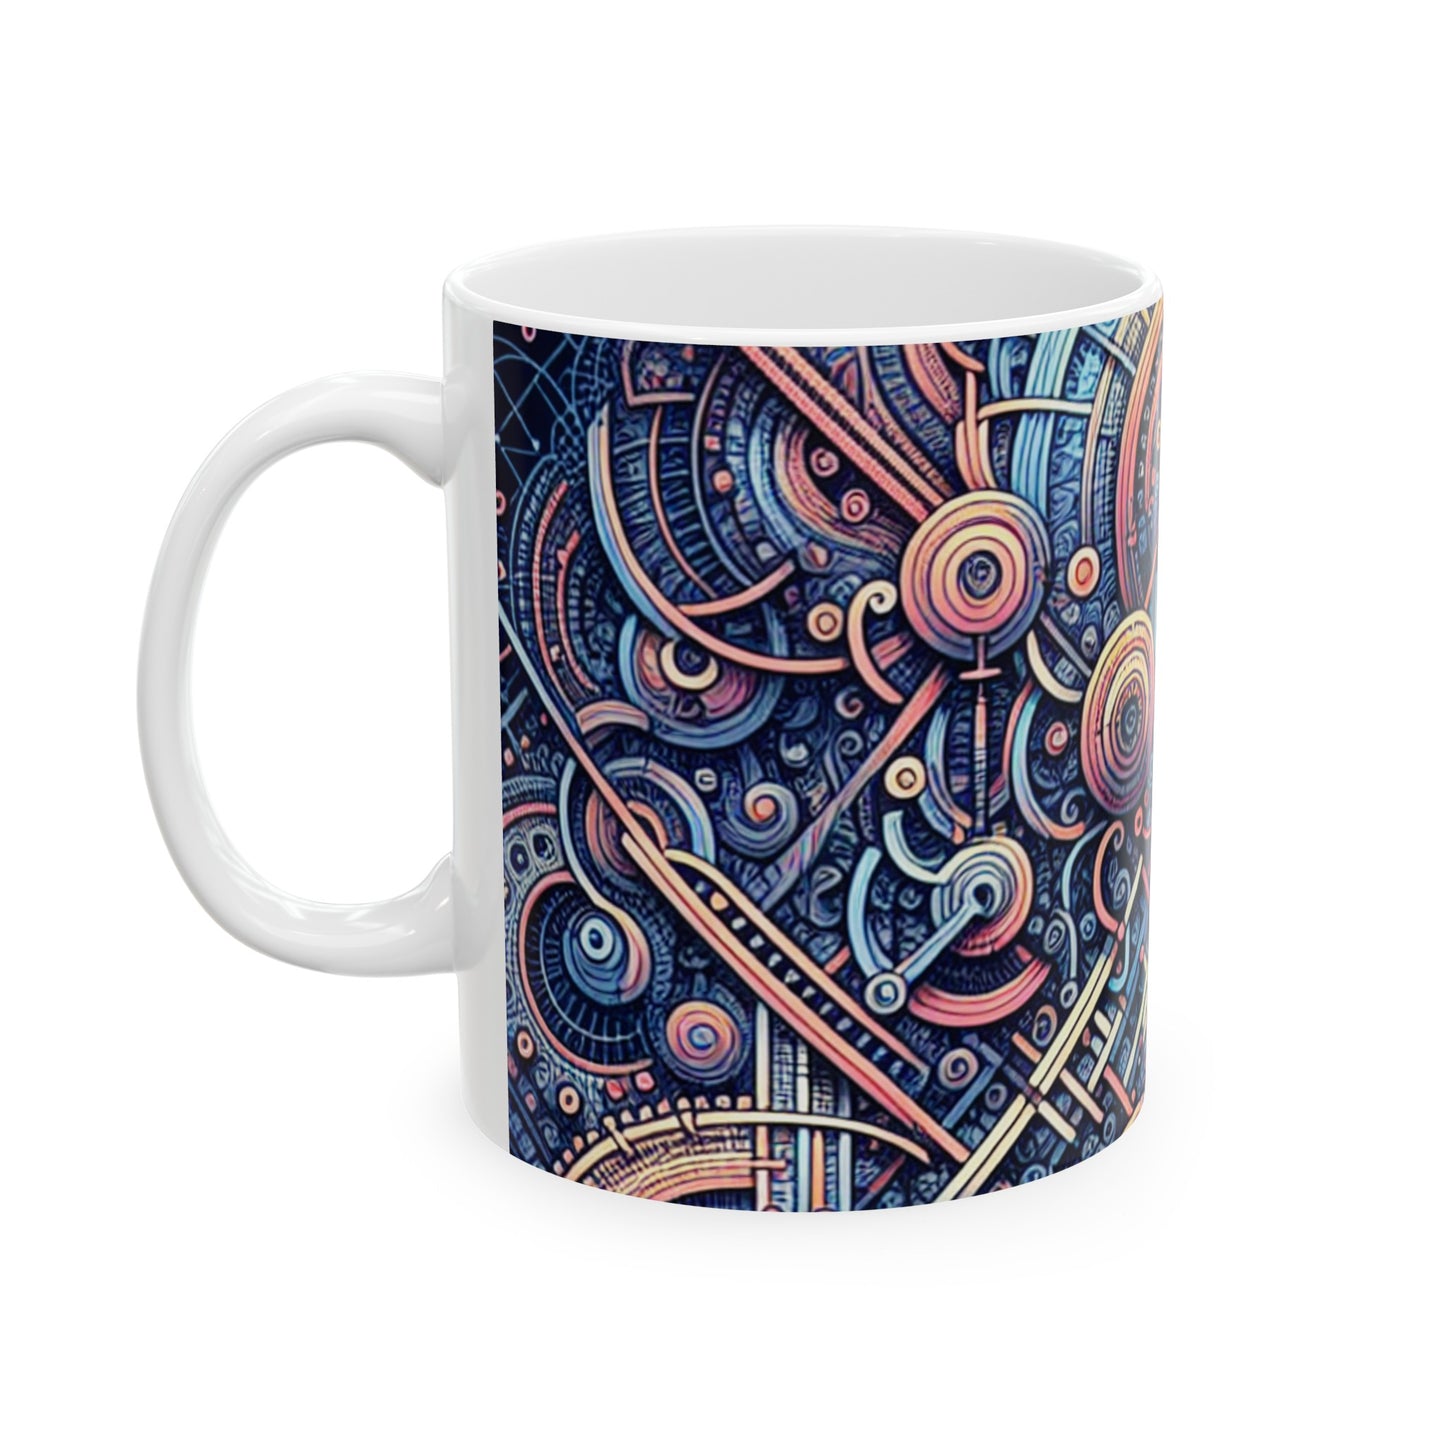 "Chaos & Order: A Dynamic Dance of Colors and Patterns" - The Alien Ceramic Mug 11oz Algorithmic Art